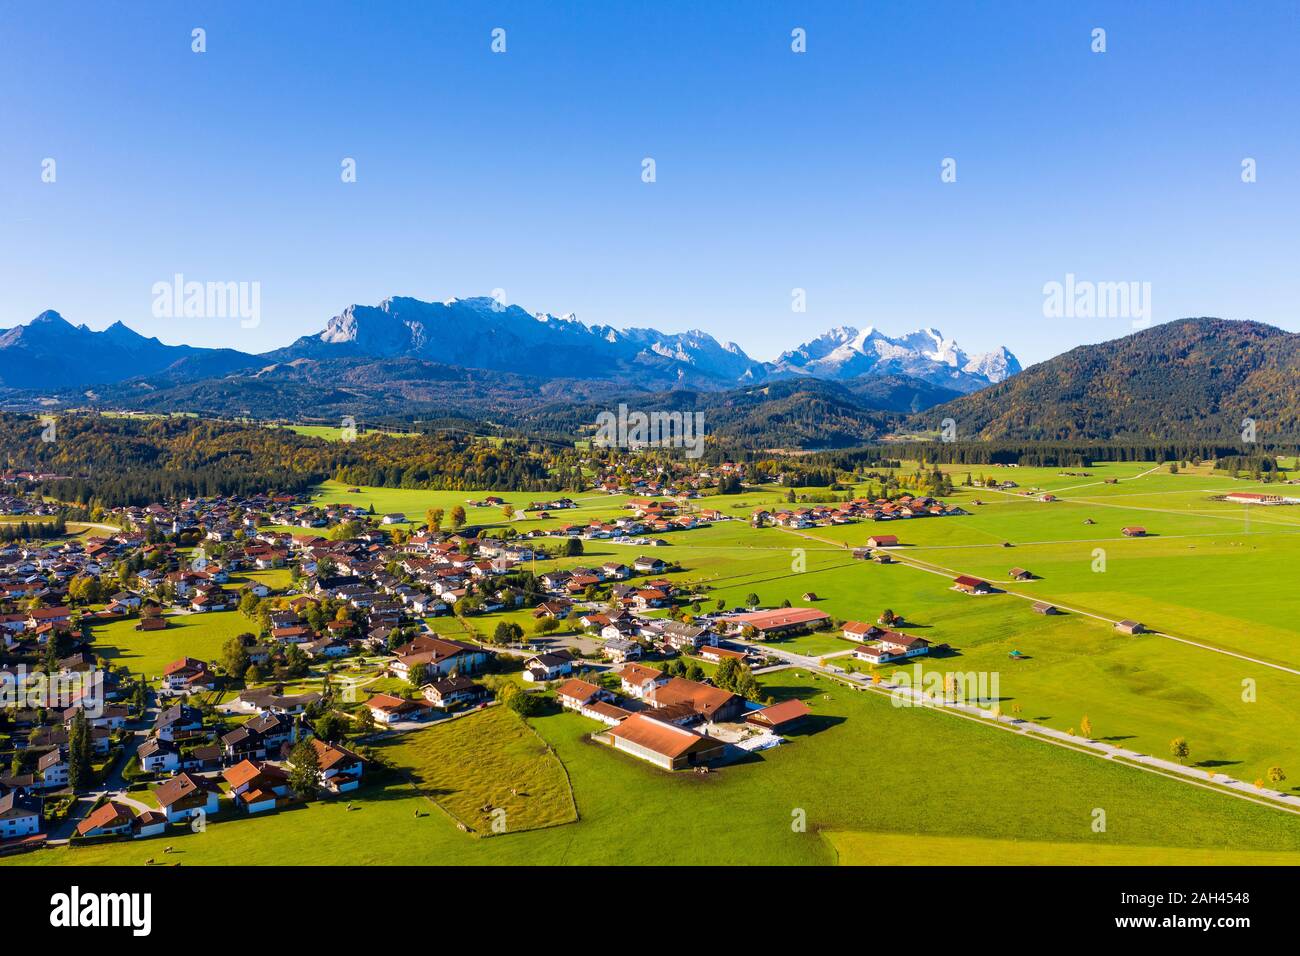 Germany, Bavaria, Upper Bavaria, Werdenfelser Land, Krun, Aerial view of green fields and village with Wetterstein Mountains in background Stock Photo